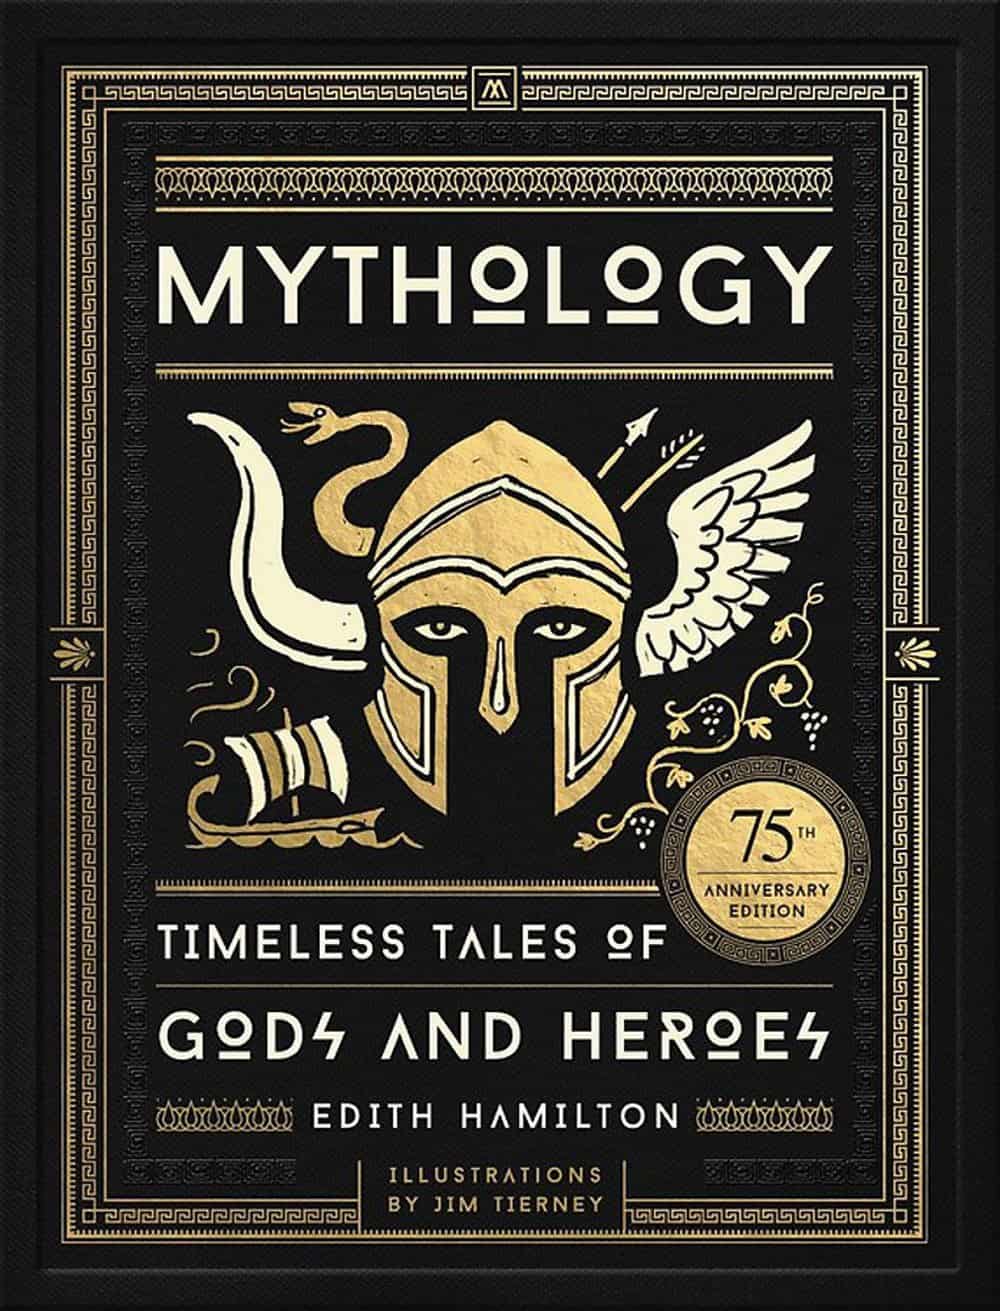 Mythology – Timeless Tales of Gods and Heroes by Edith Hamilton